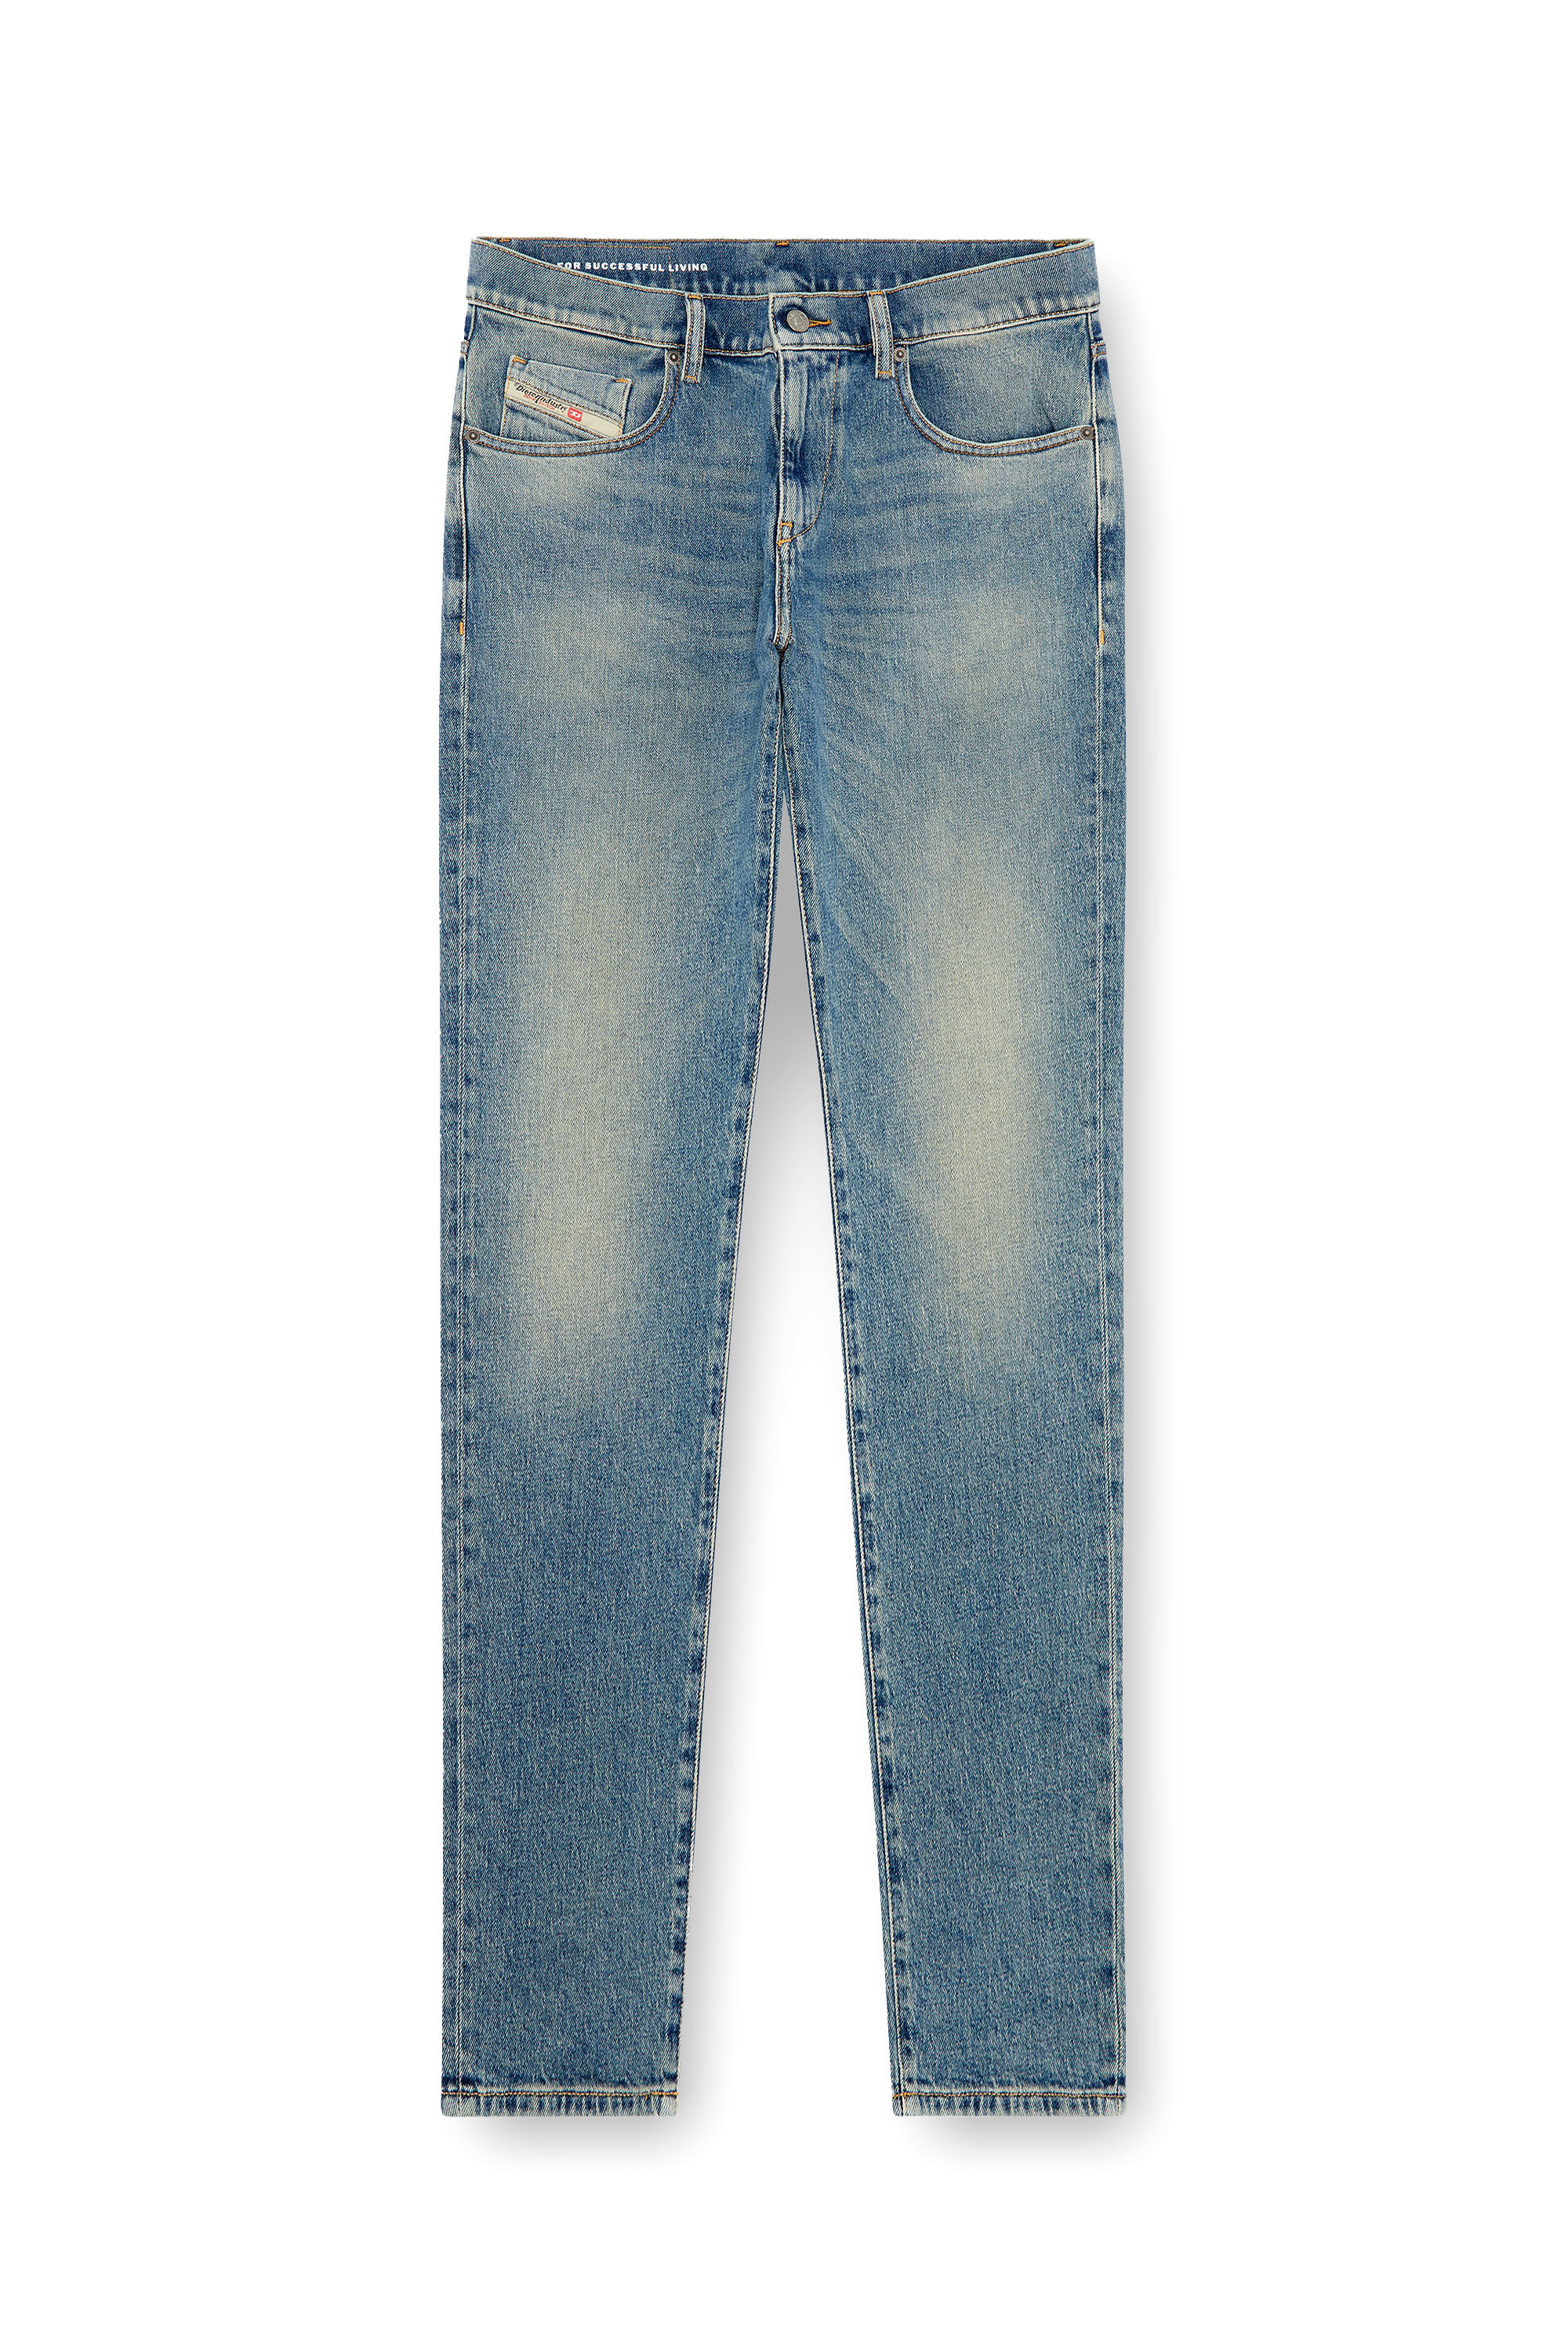 Diesel - Slim Jeans 2019 D-Strukt 09J55, Hombre Slim Jeans - 2019 D-Strukt in Azul marino - Image 3